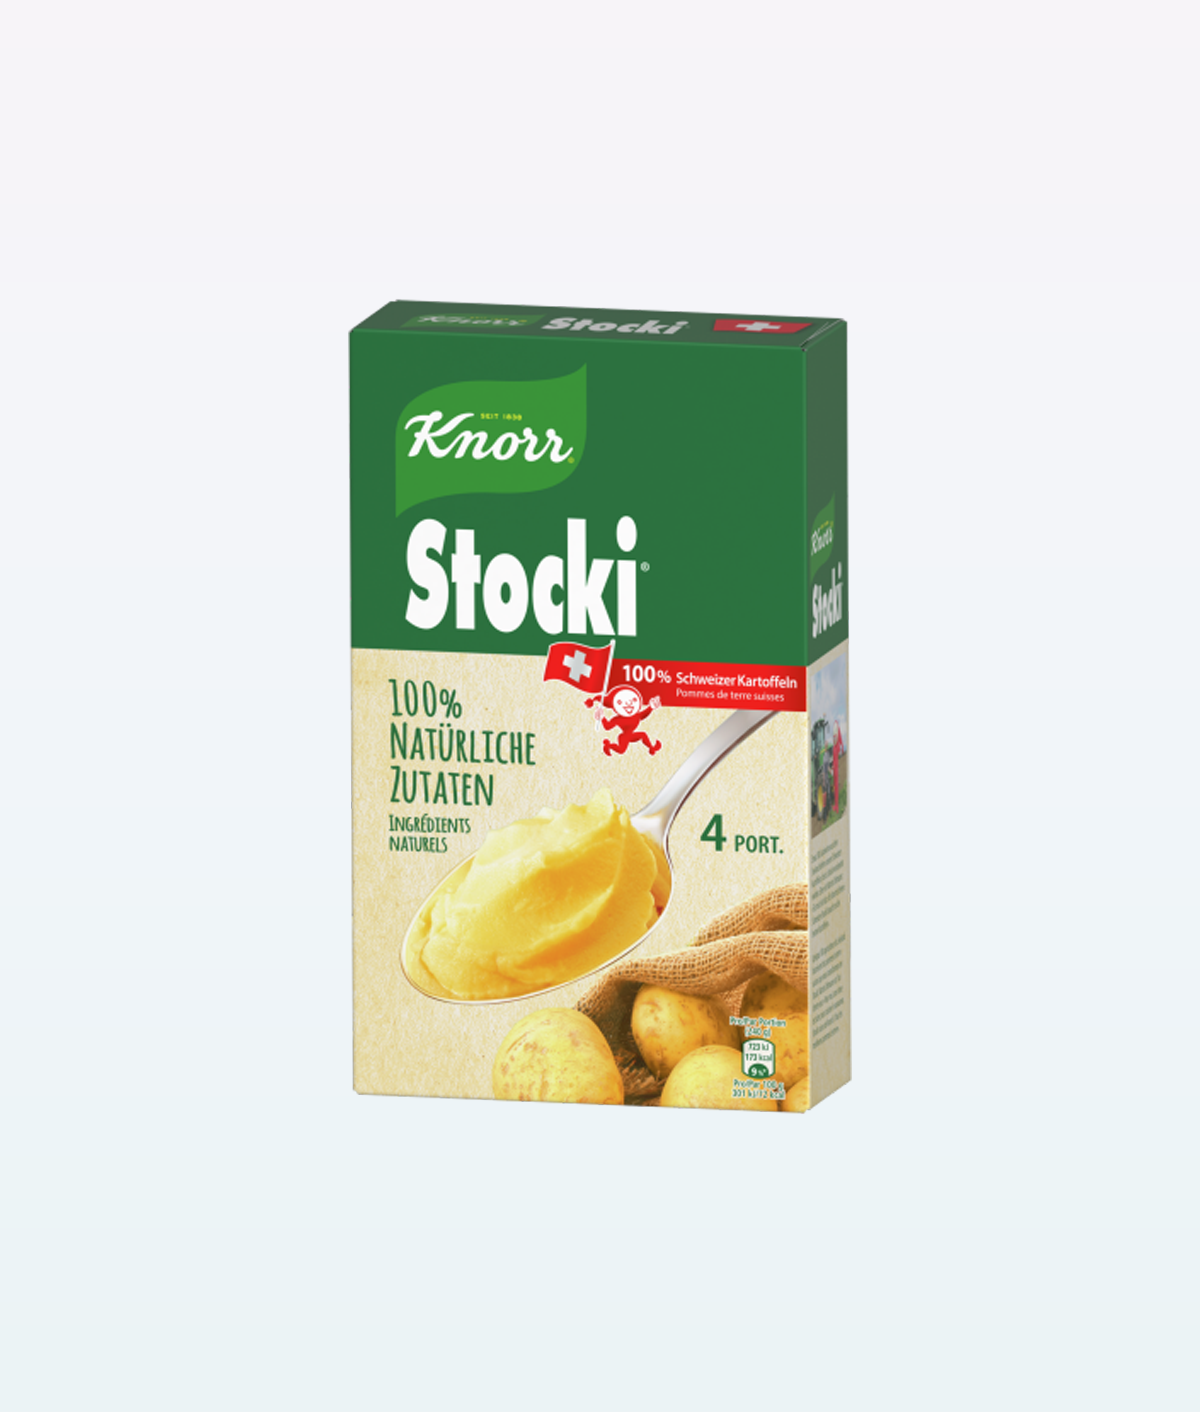 stocki-knorr-instant-mashed-potato